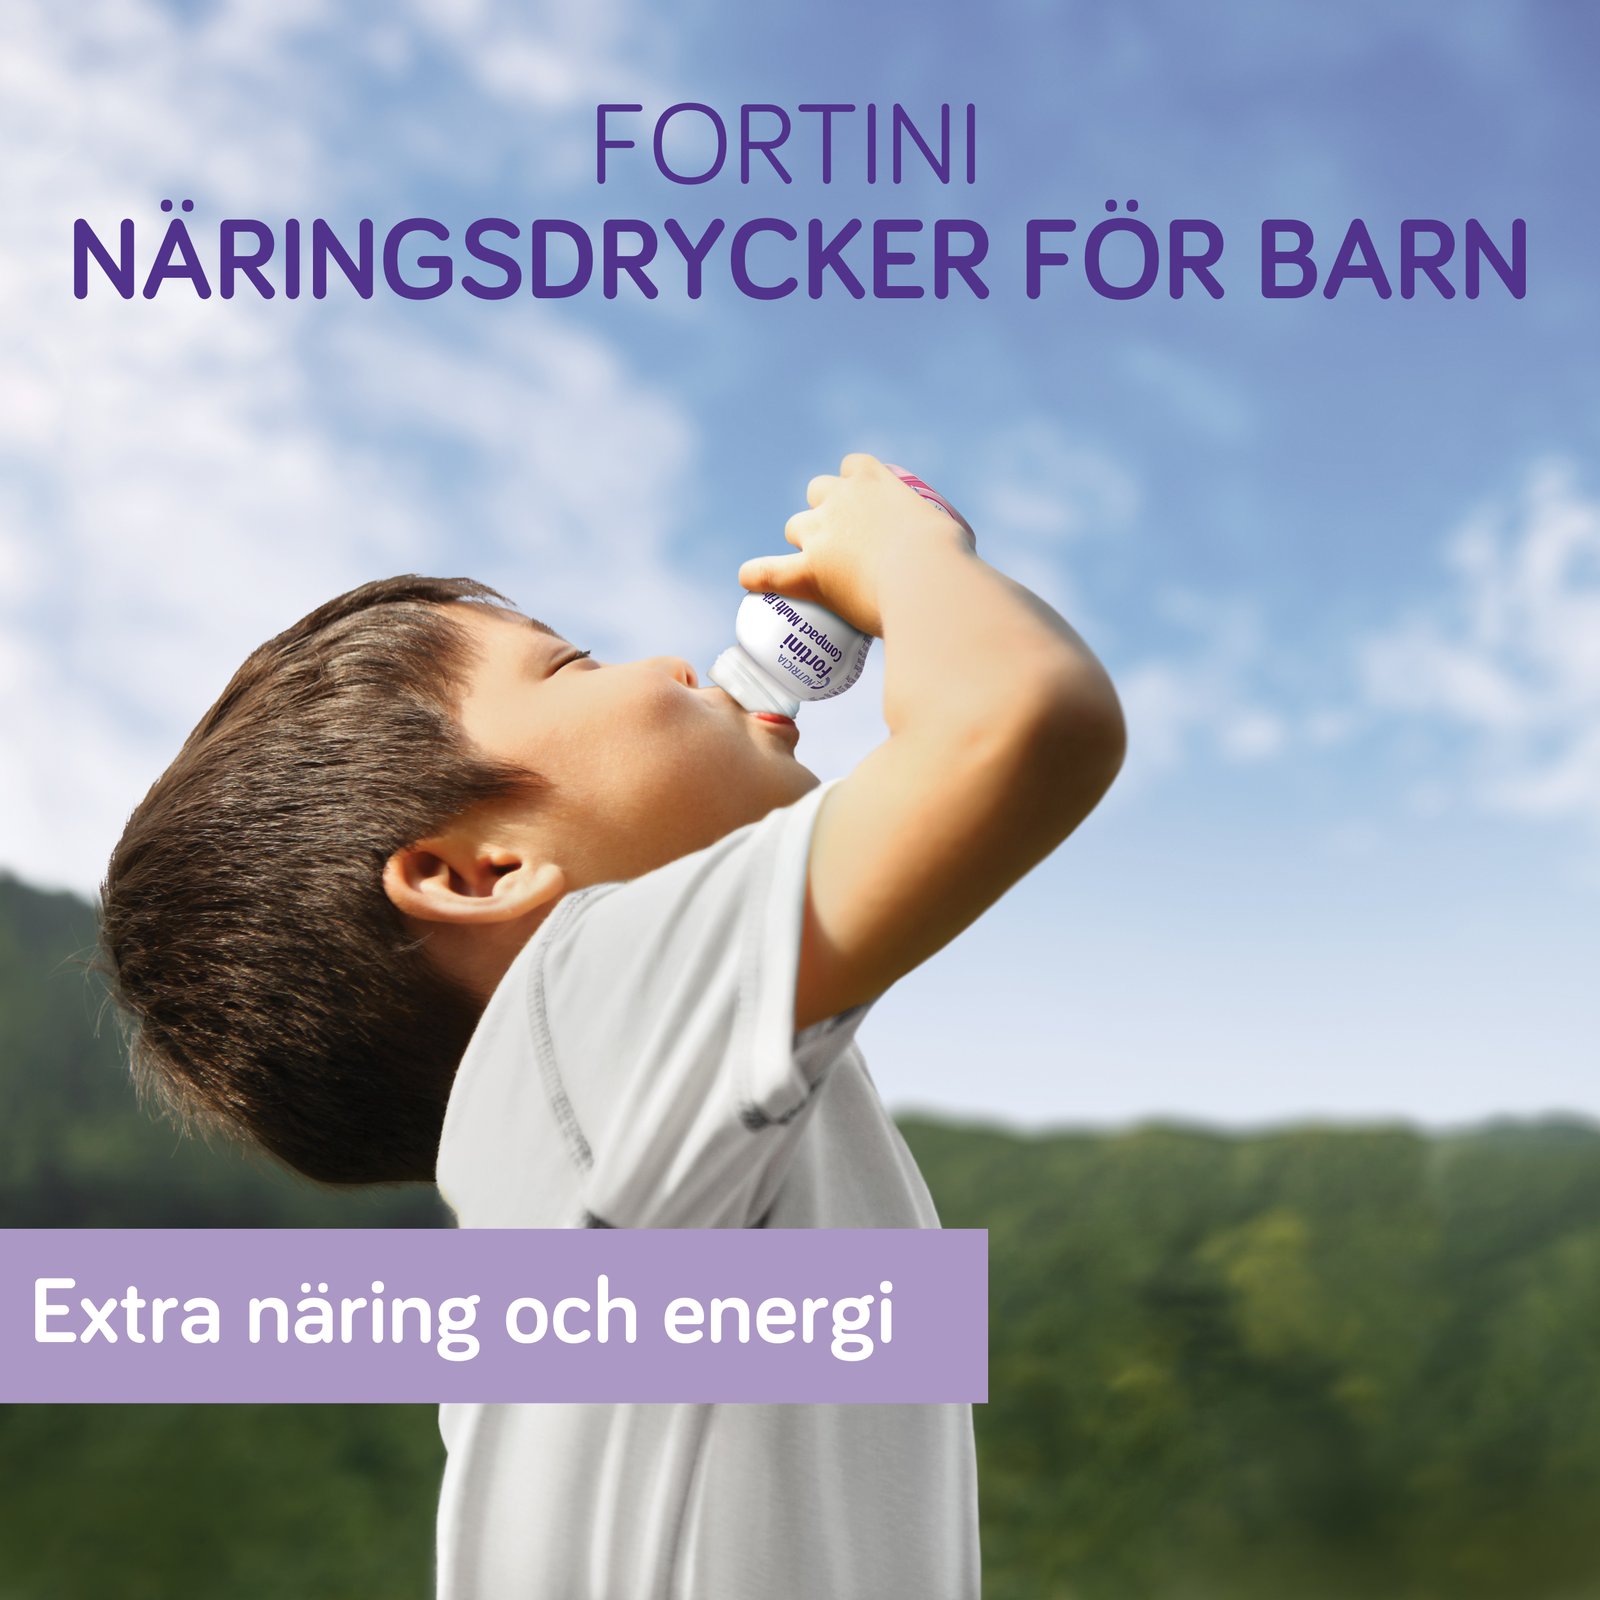 Nutricia Fortini Compact Multi Fibre Jordgubb Näringsdryck för barn  4 x 125 ml